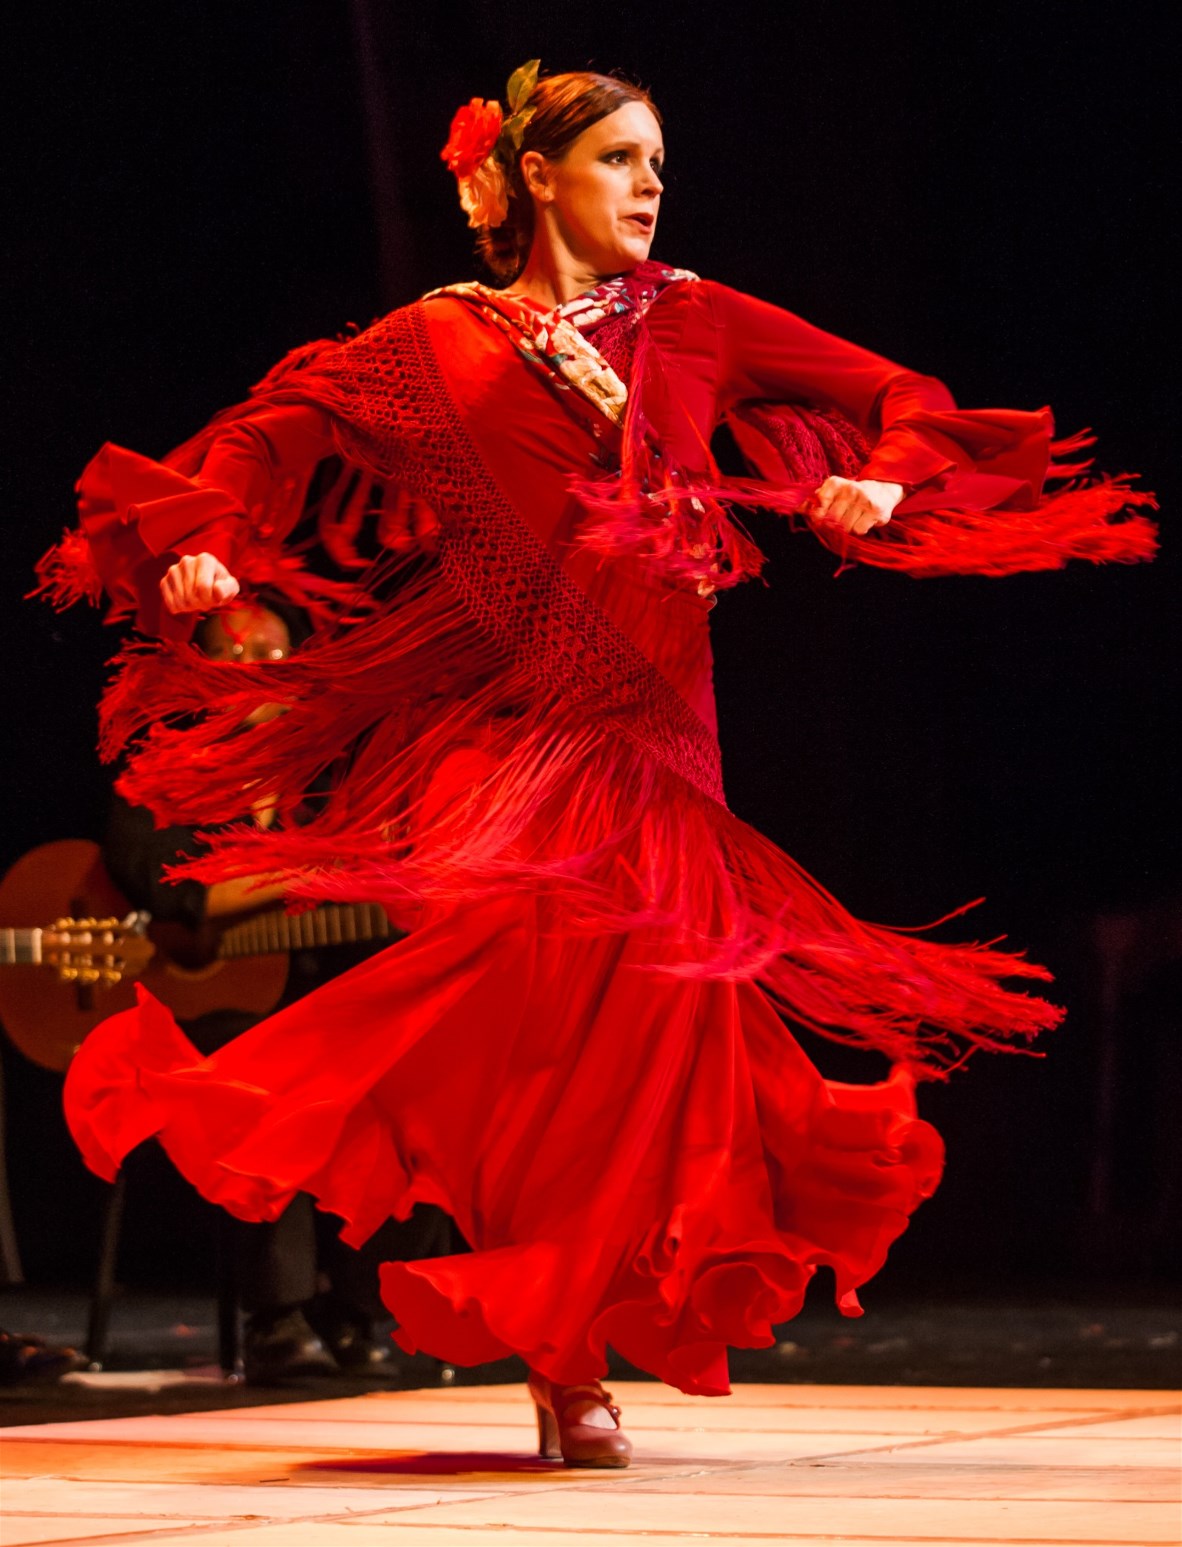 Flamenco Dance Schools in Seville - La Candela Flamenco